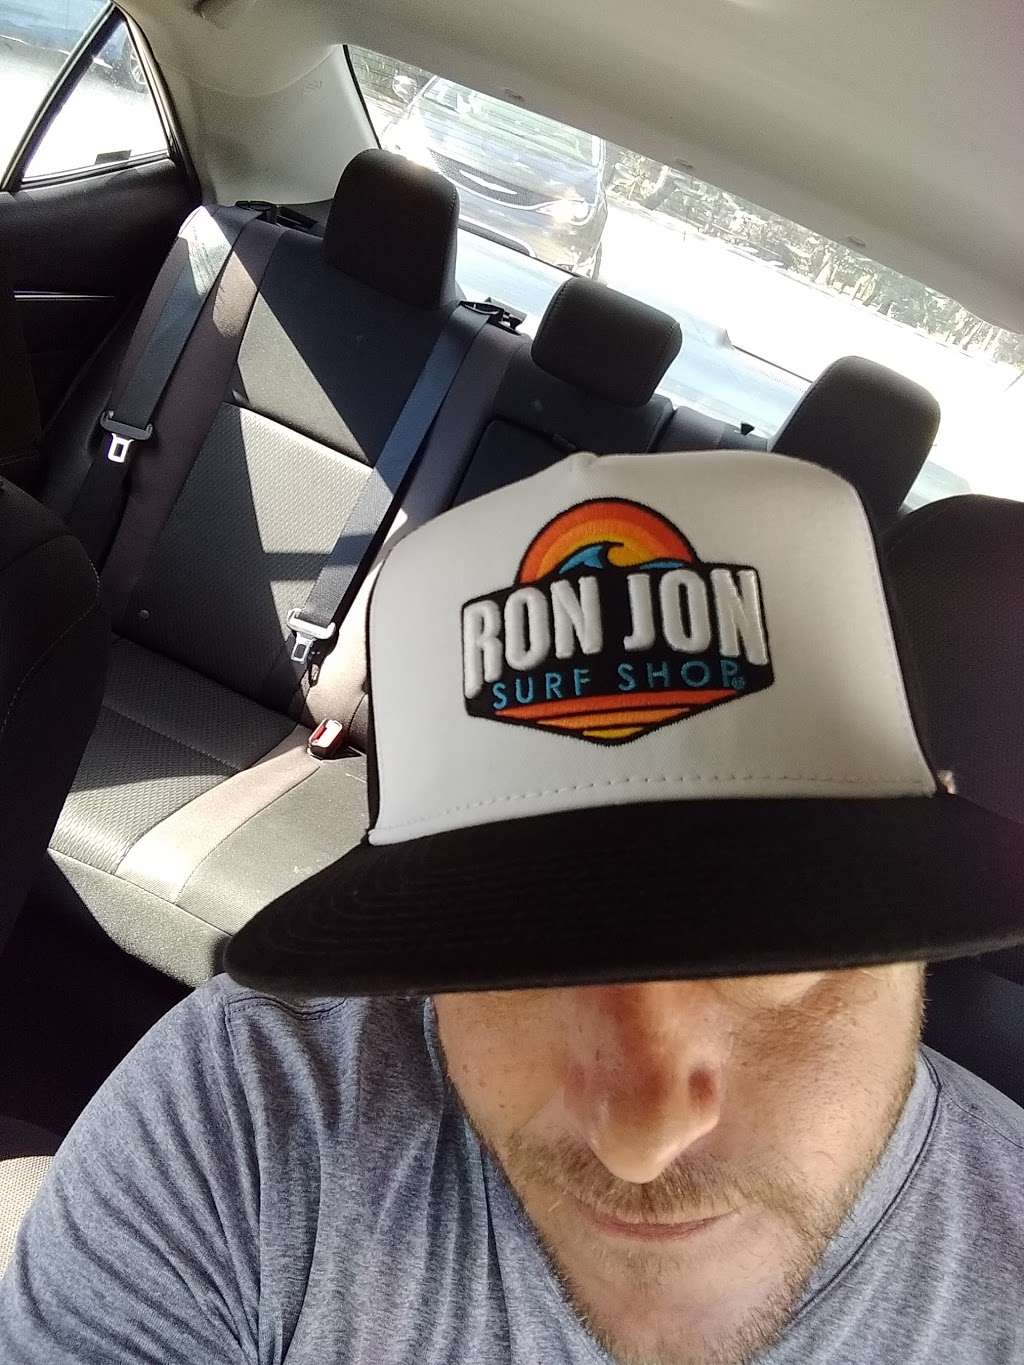 Ron Jon Surf Shop @ MCO | 9792 Airport Boulevard, Orlando, FL 32827 | Phone: (407) 825-2217